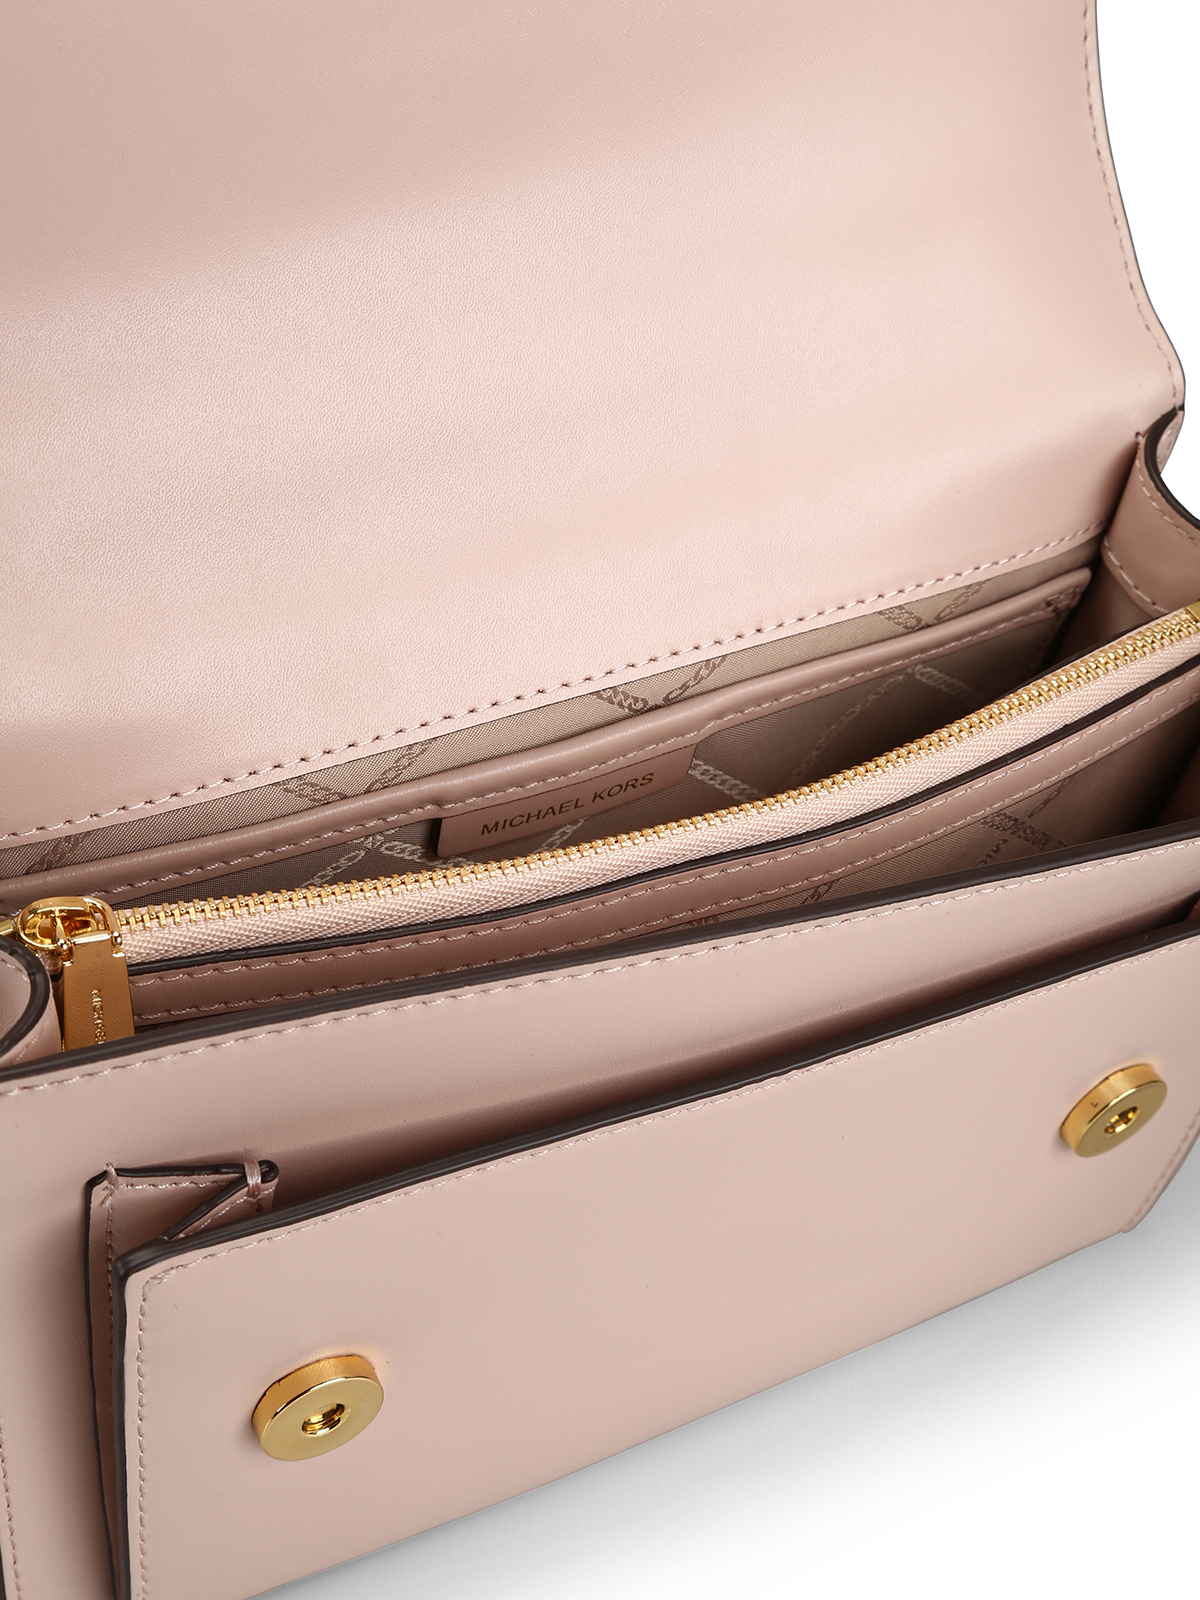 MICHAEL KORS shoulder bag 35T8GTTC9L light pink leather chain pochette